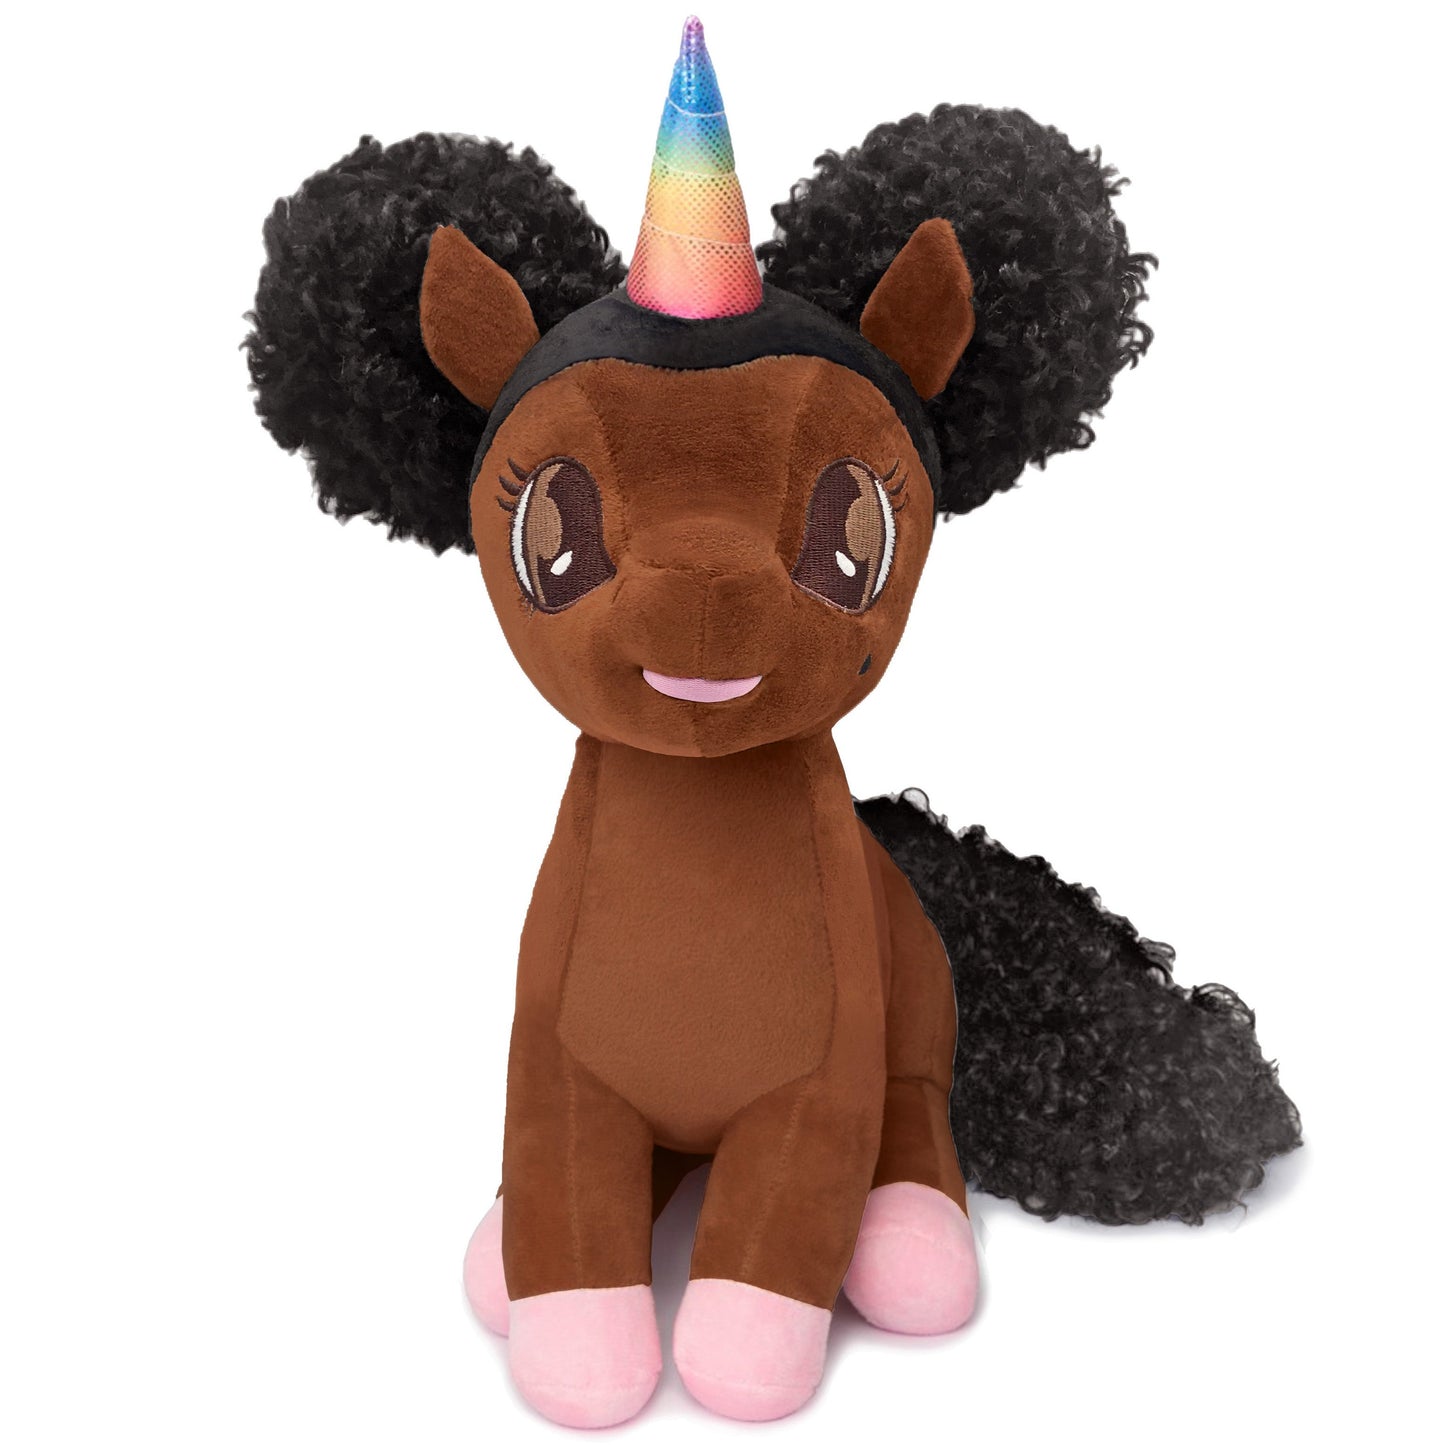 Chloe Unicorn Plush Toy with Brown Eyes - 15 inch